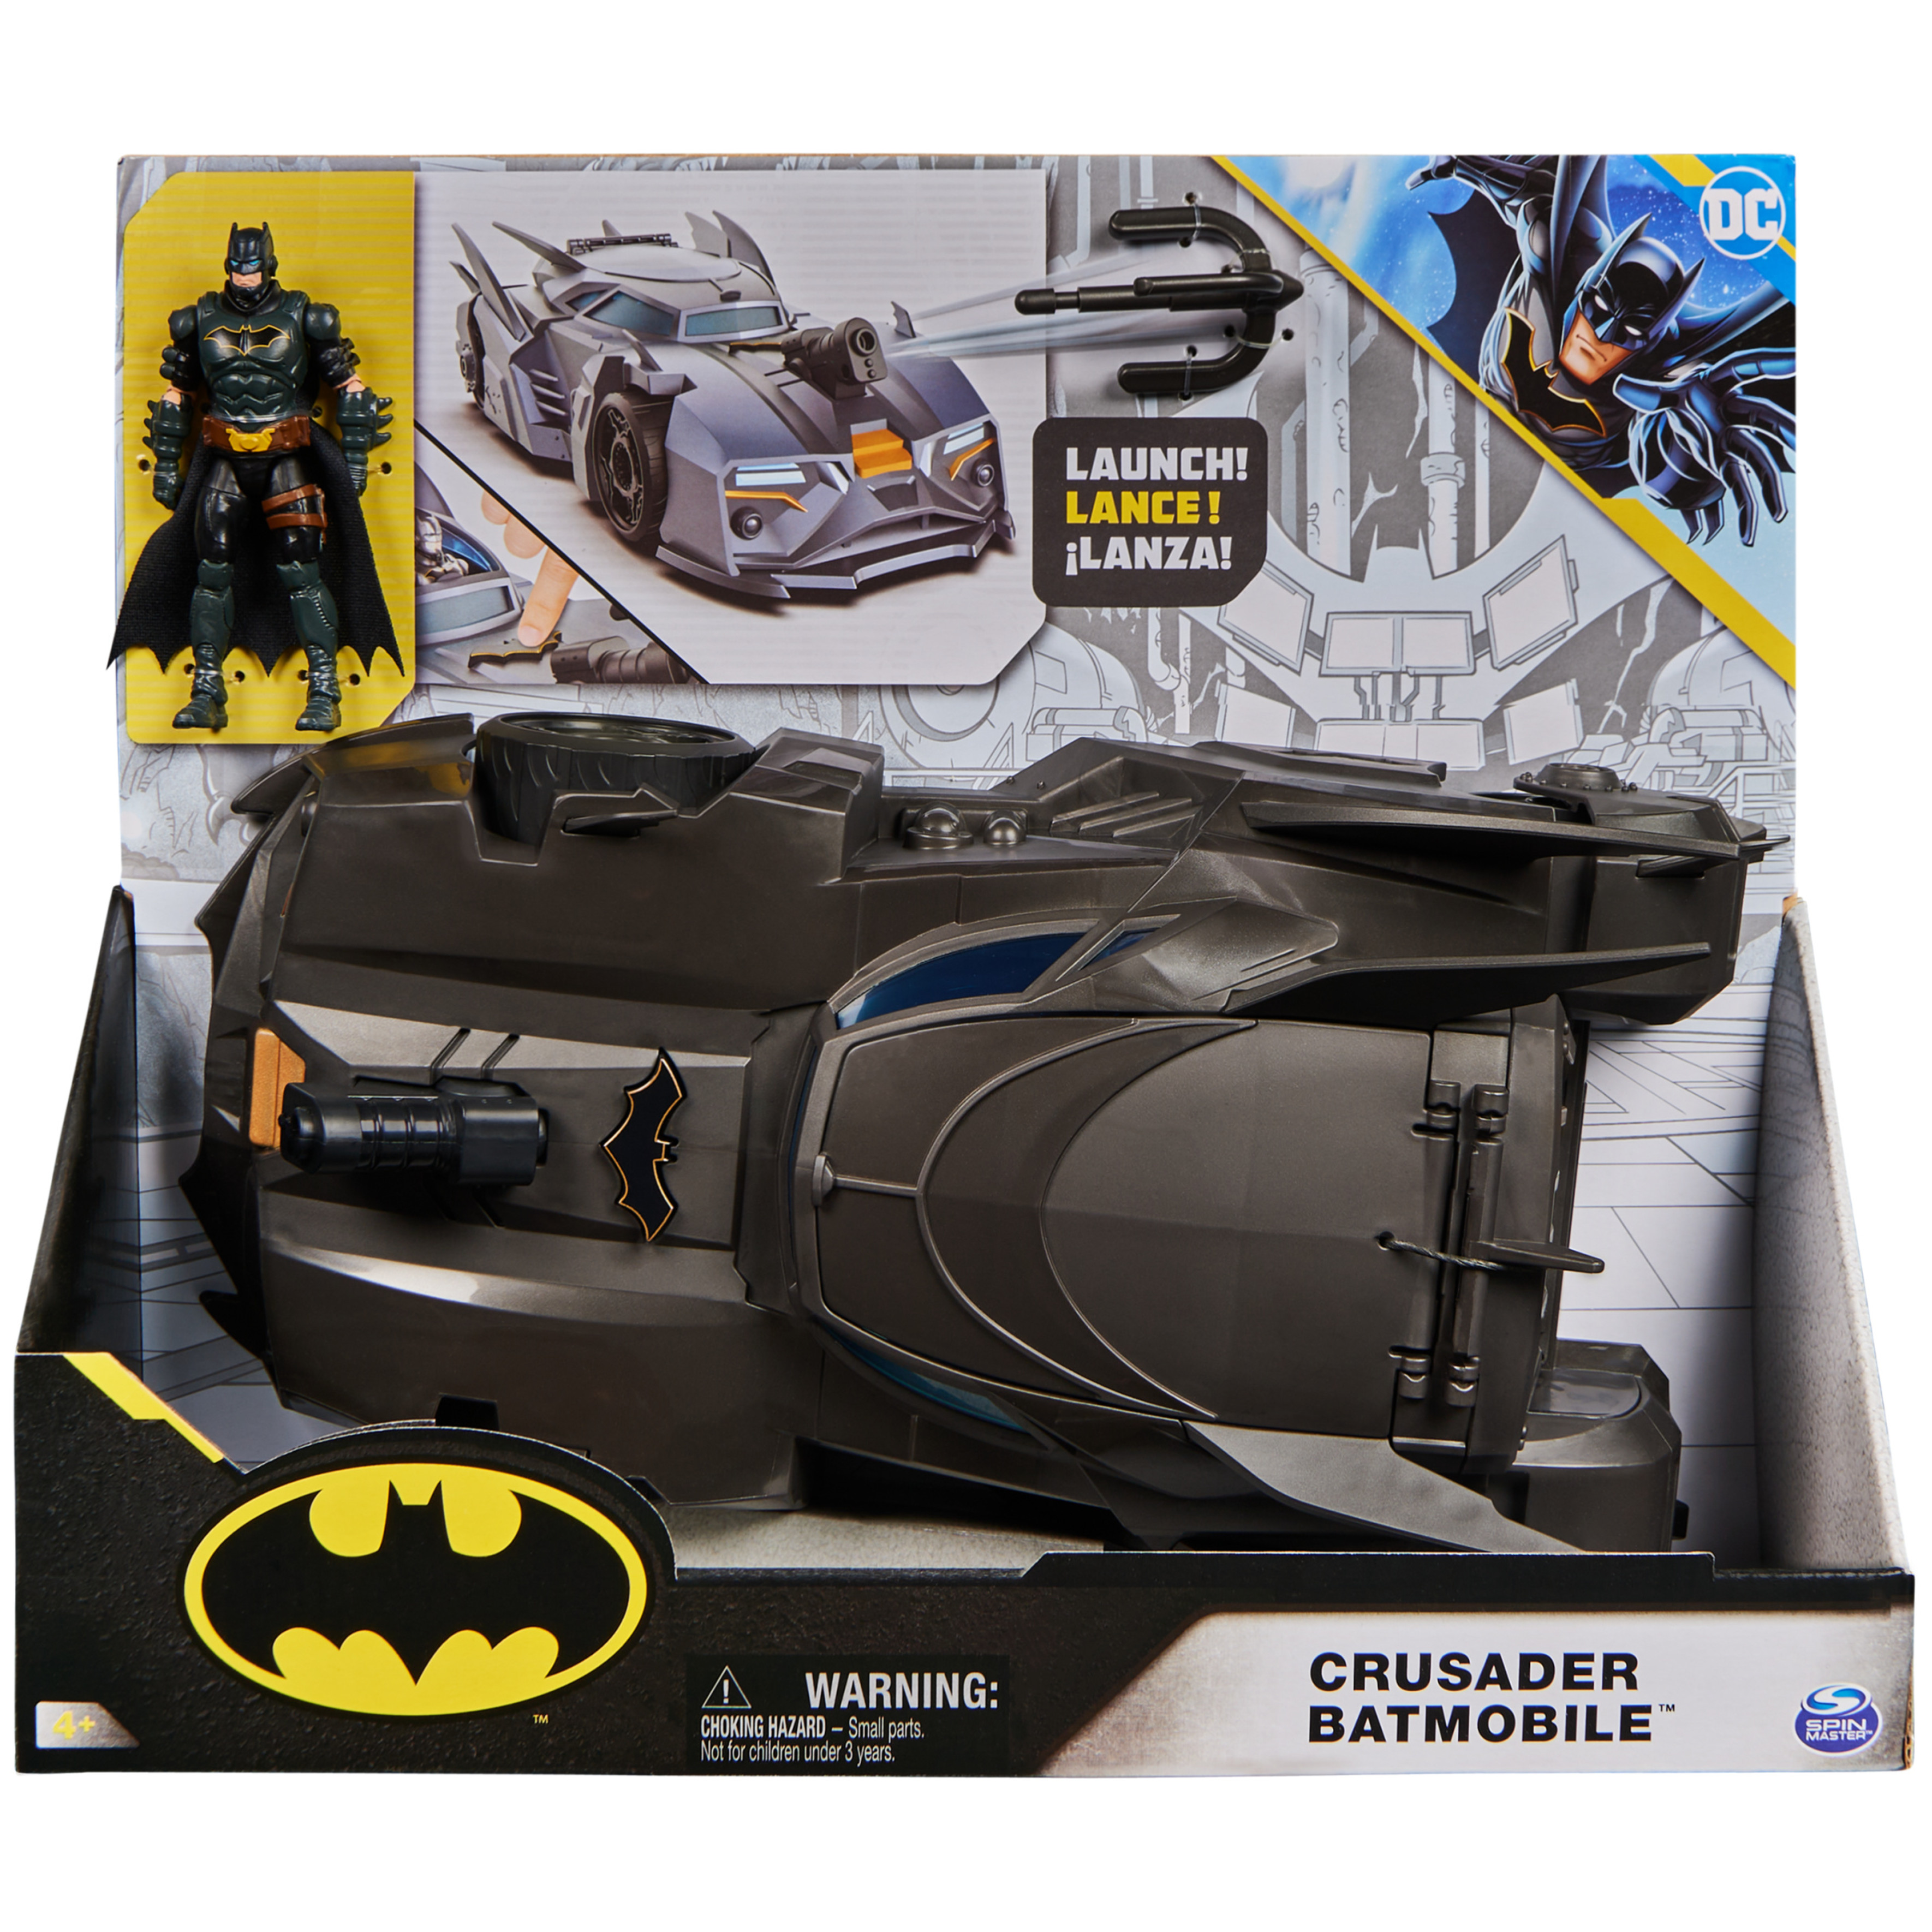 DC Comics: Crusader Batmobile Playset with Exclusive 4-inch Batman Figure - image 3 of 9